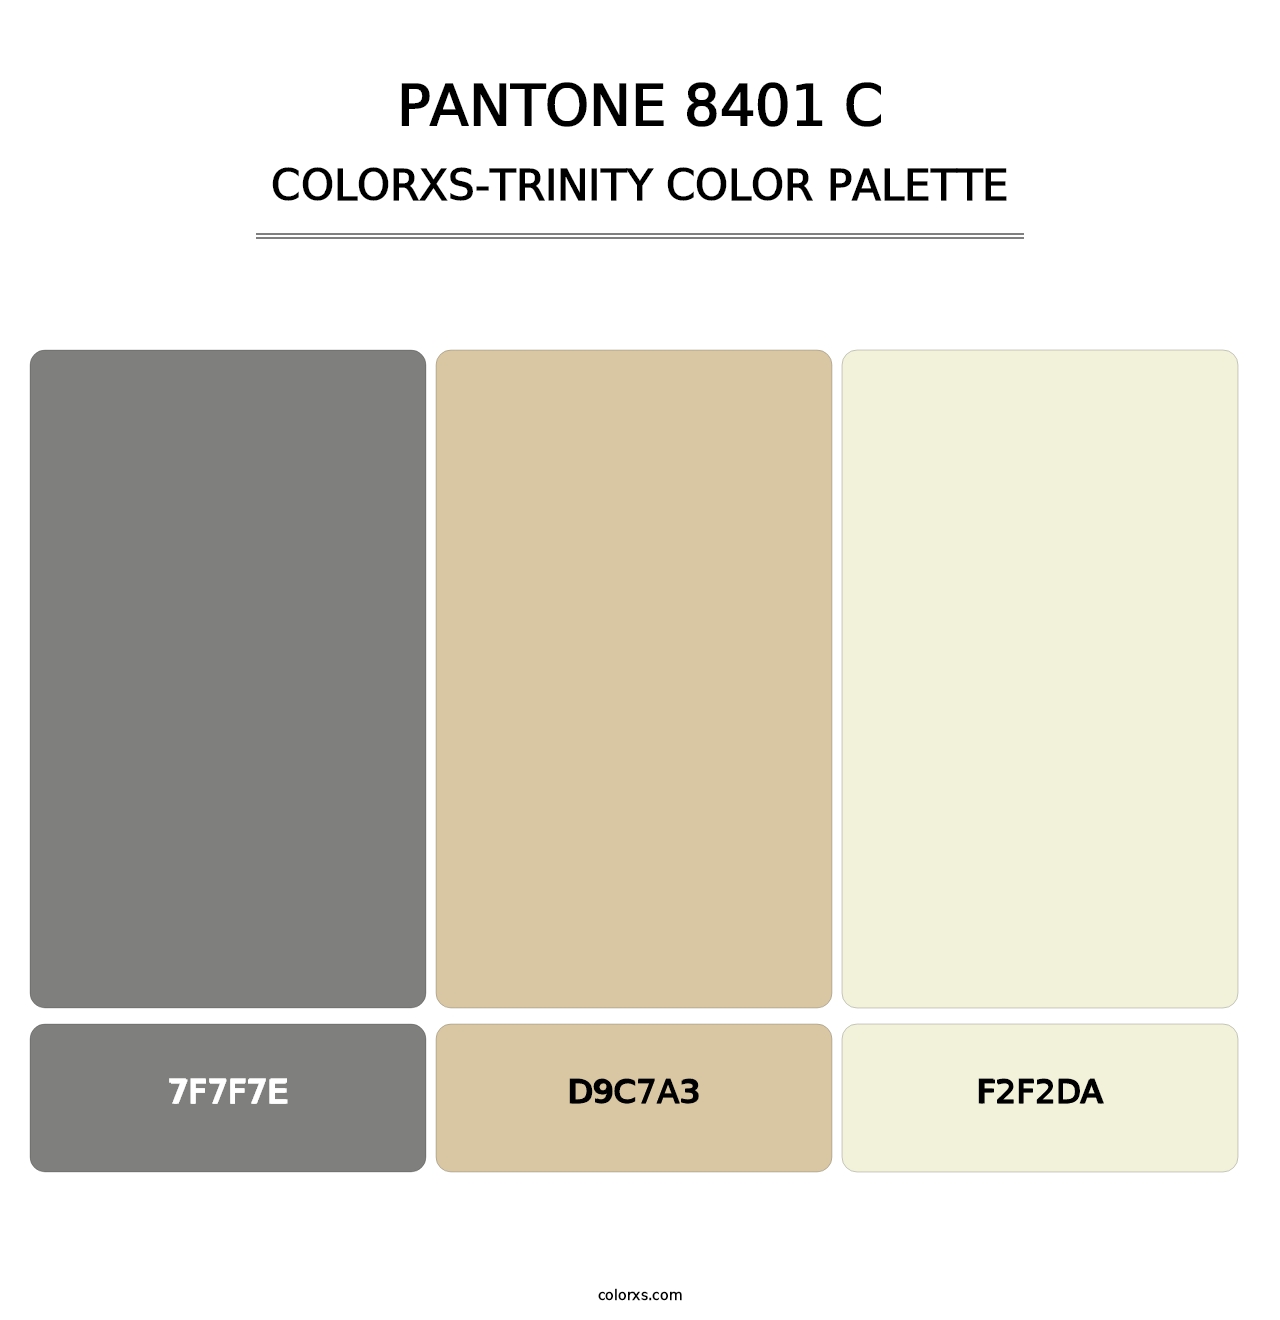 PANTONE 8401 C - Colorxs Trinity Palette